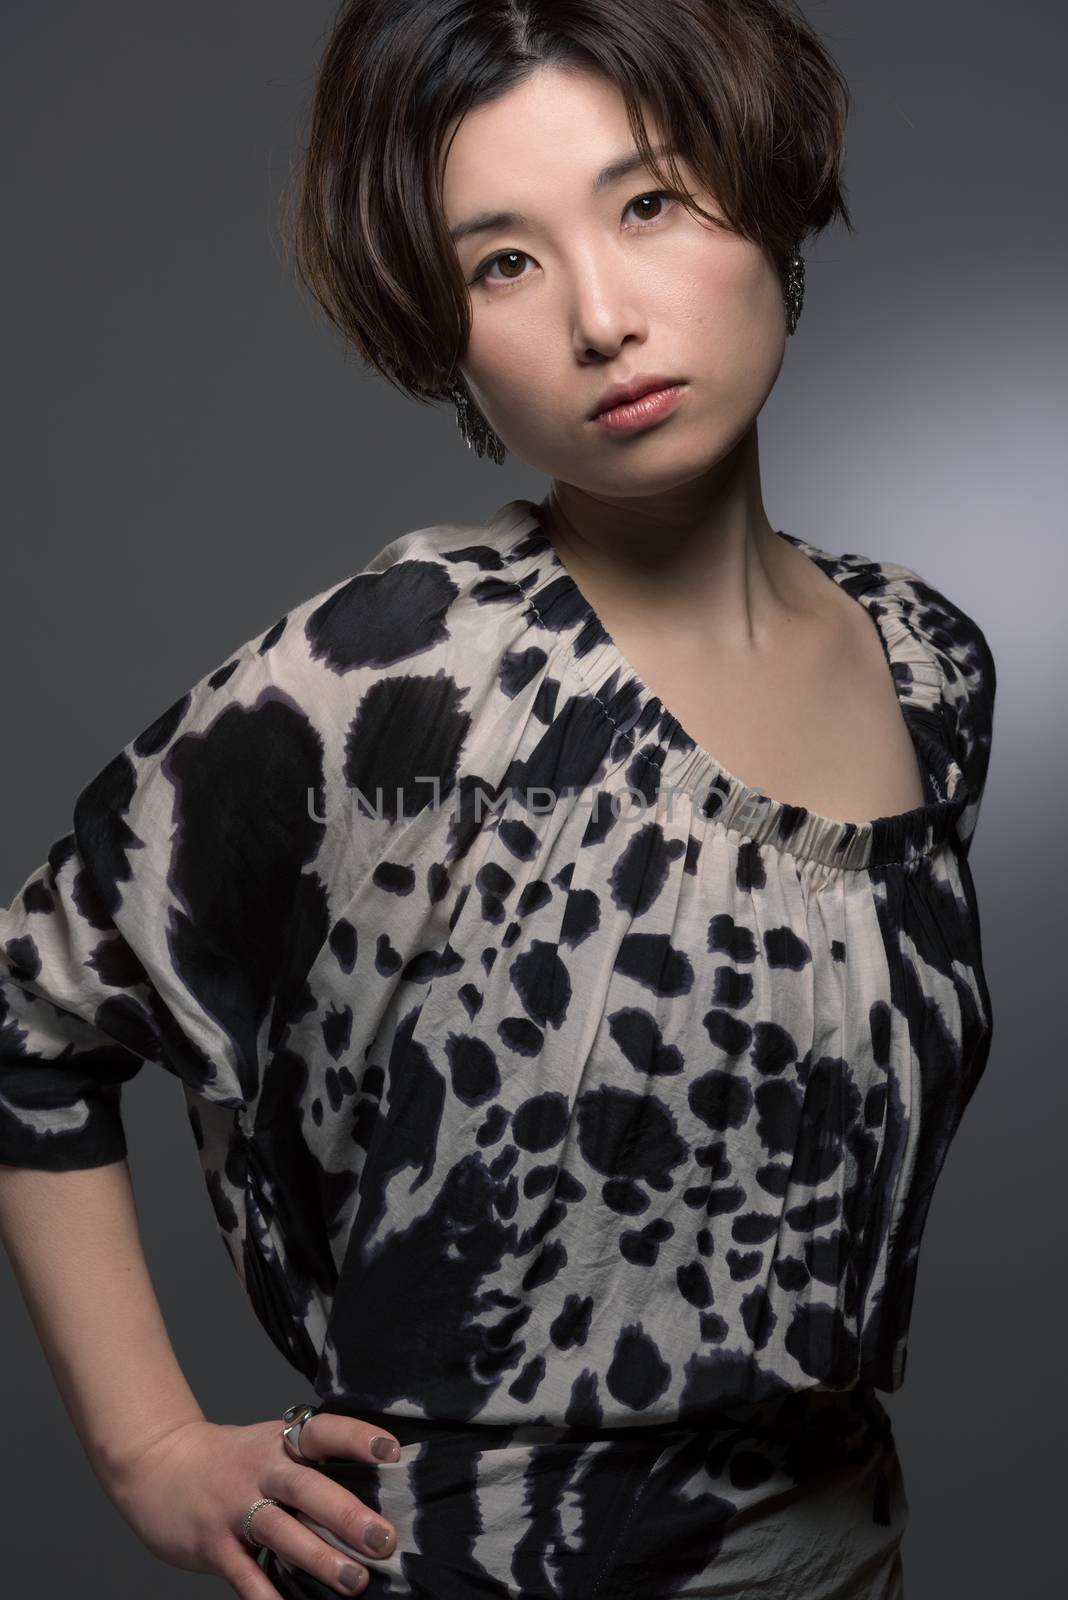 Vertical Japanese Woman Portrait by justtscott